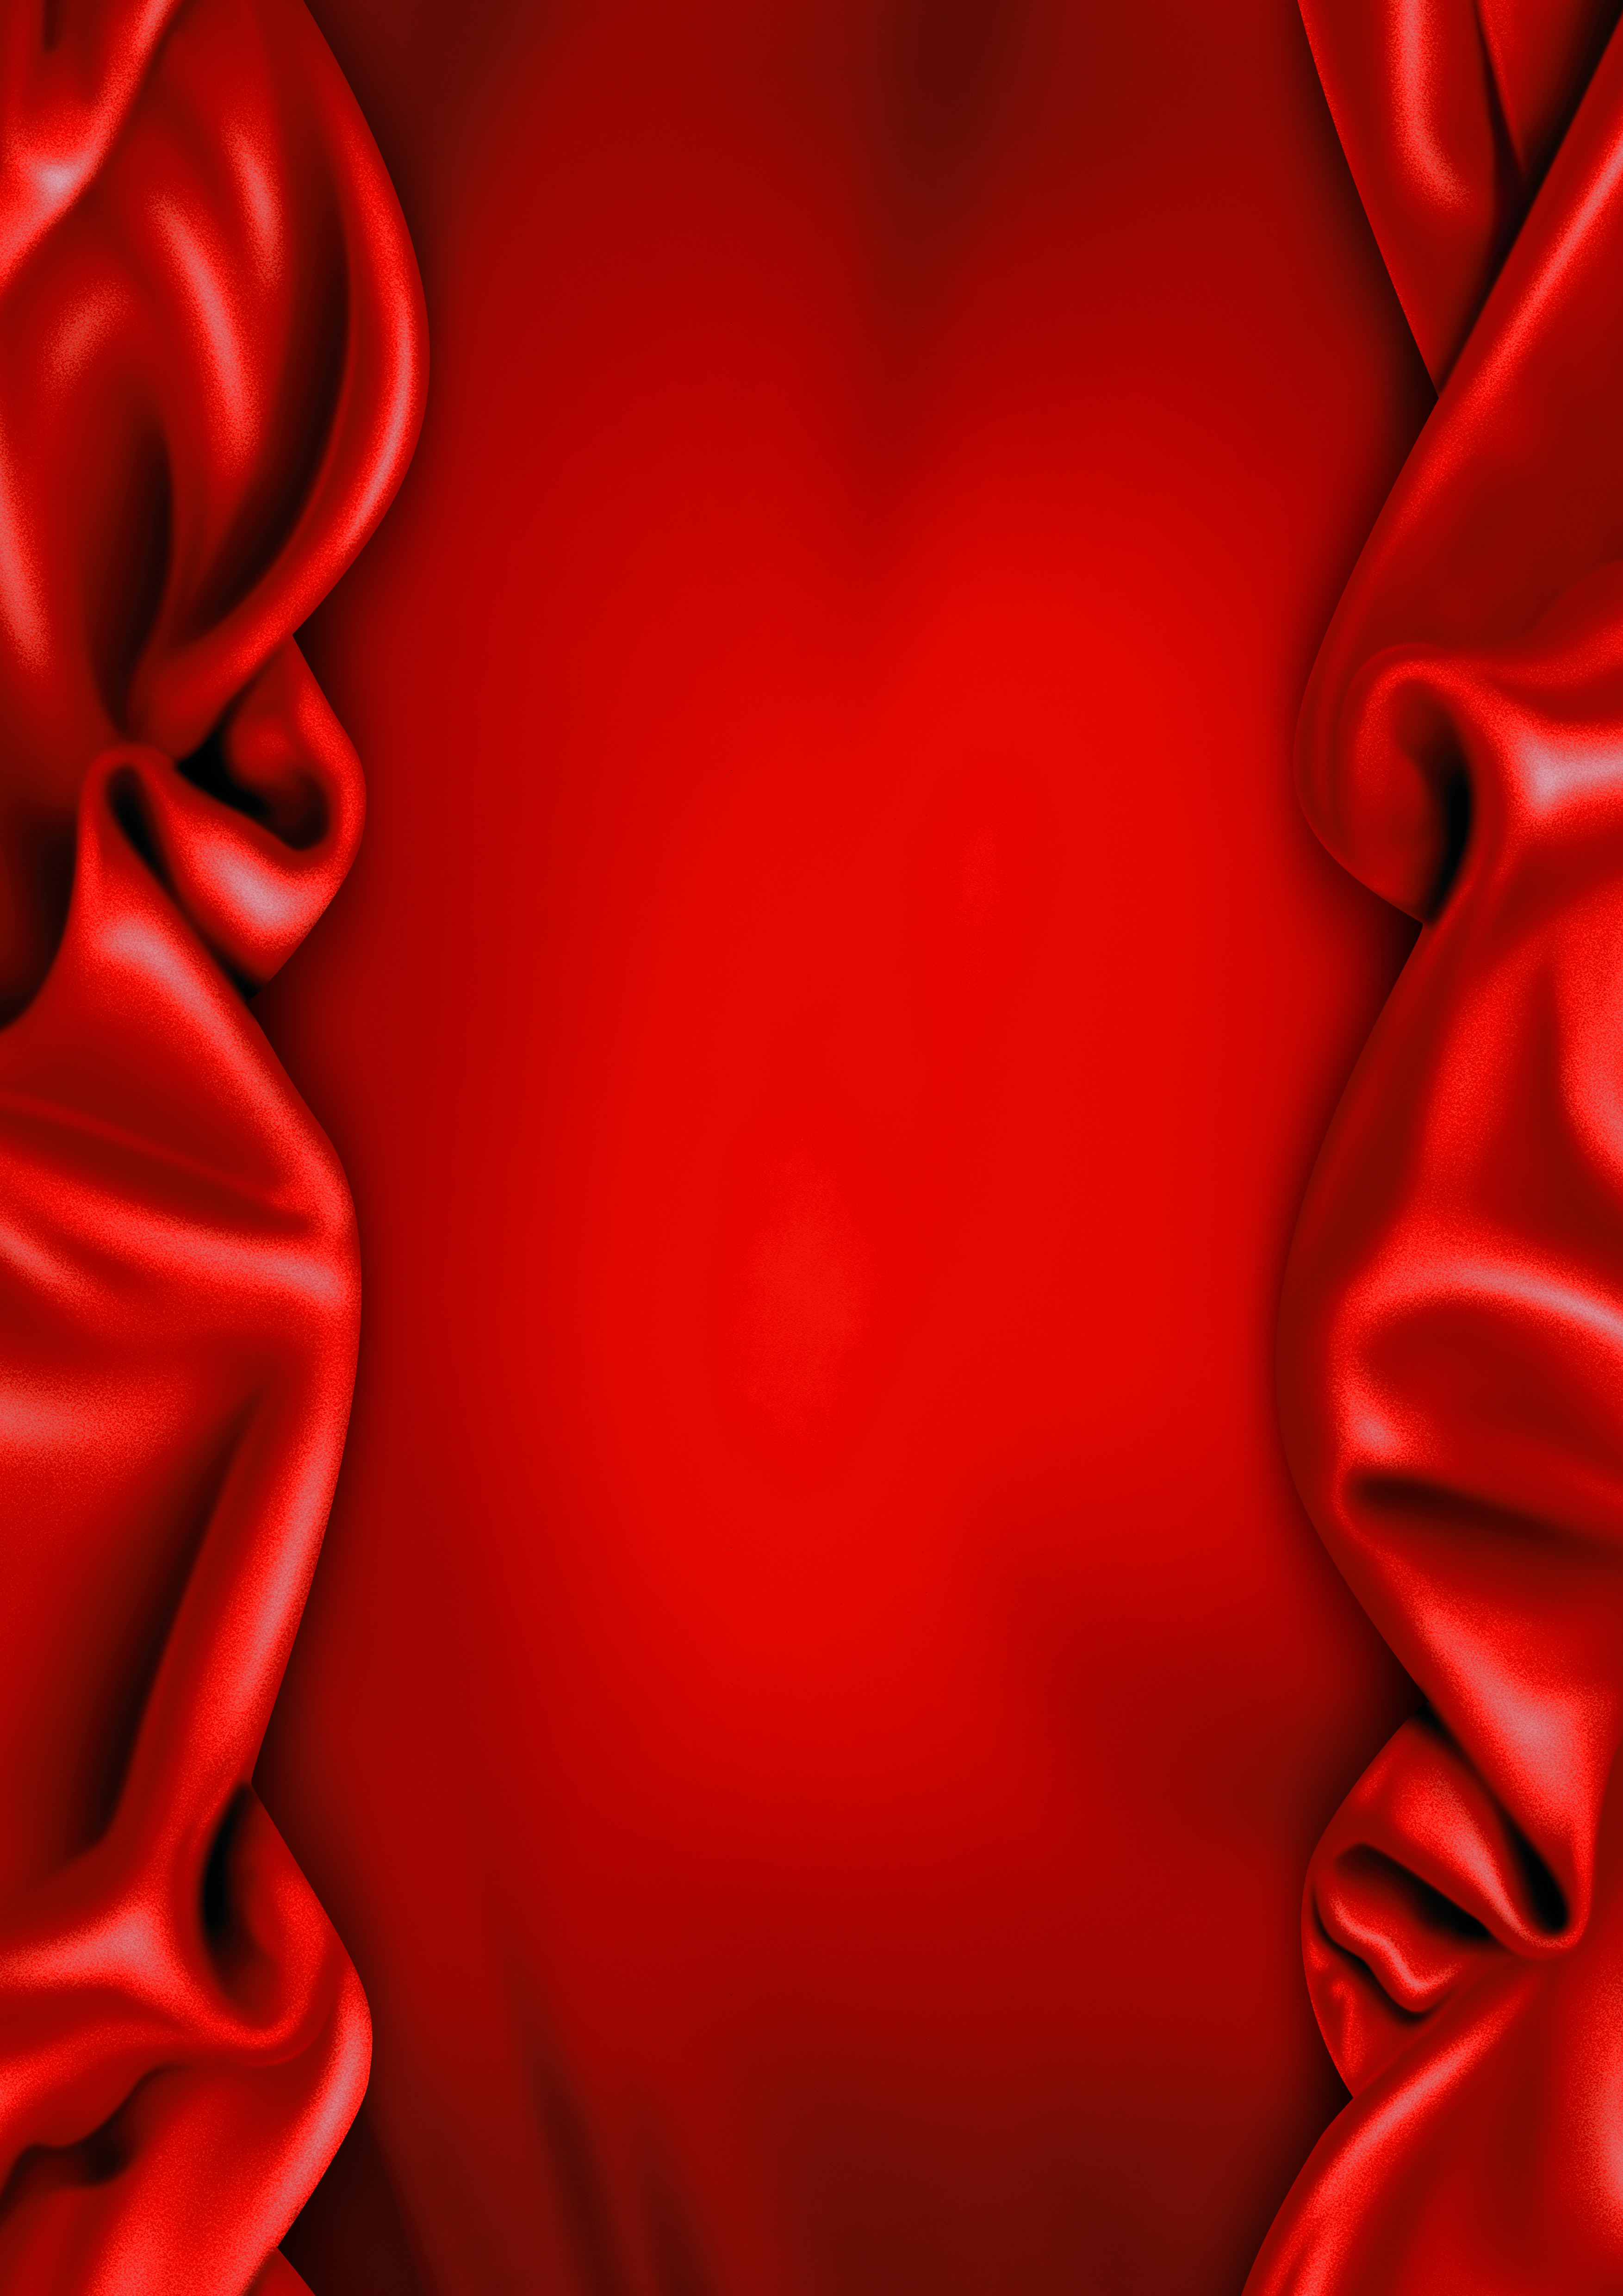 red velvet background texture, red velvet, fabric cloth, texture, background